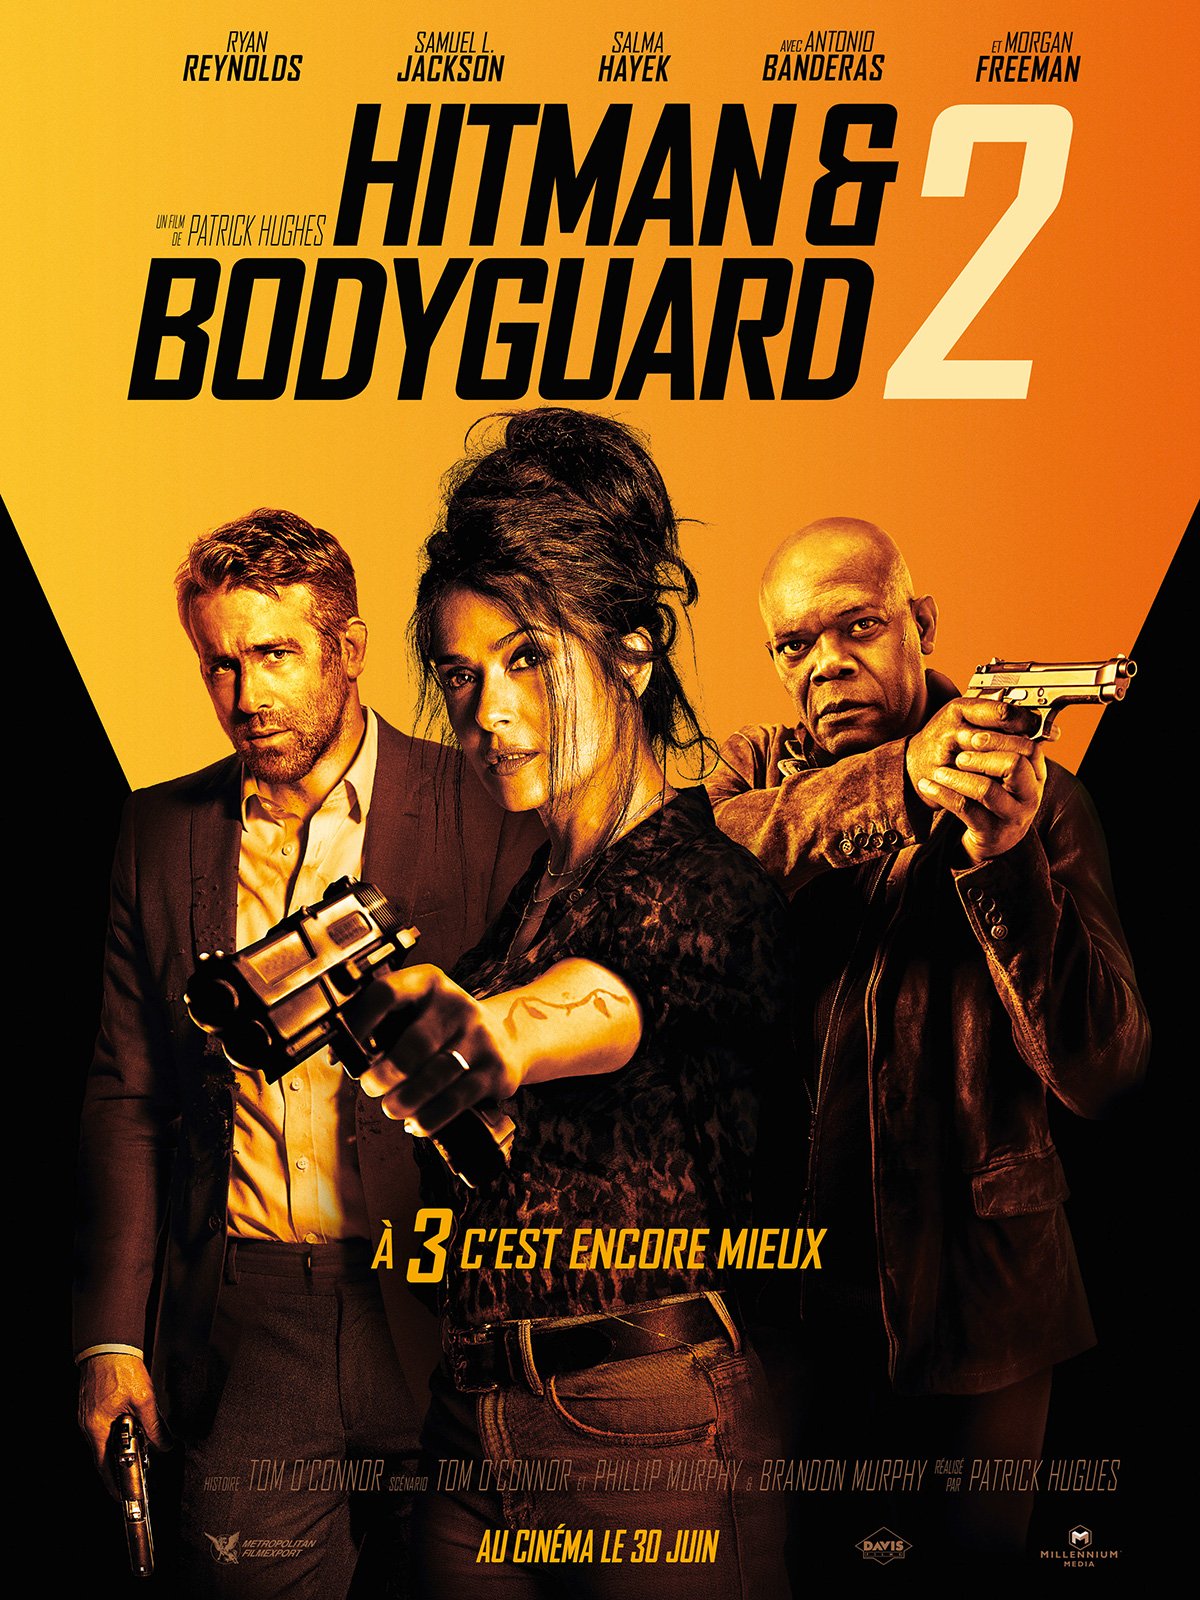 Hitman & Bodyguard 2 streaming vf gratuit